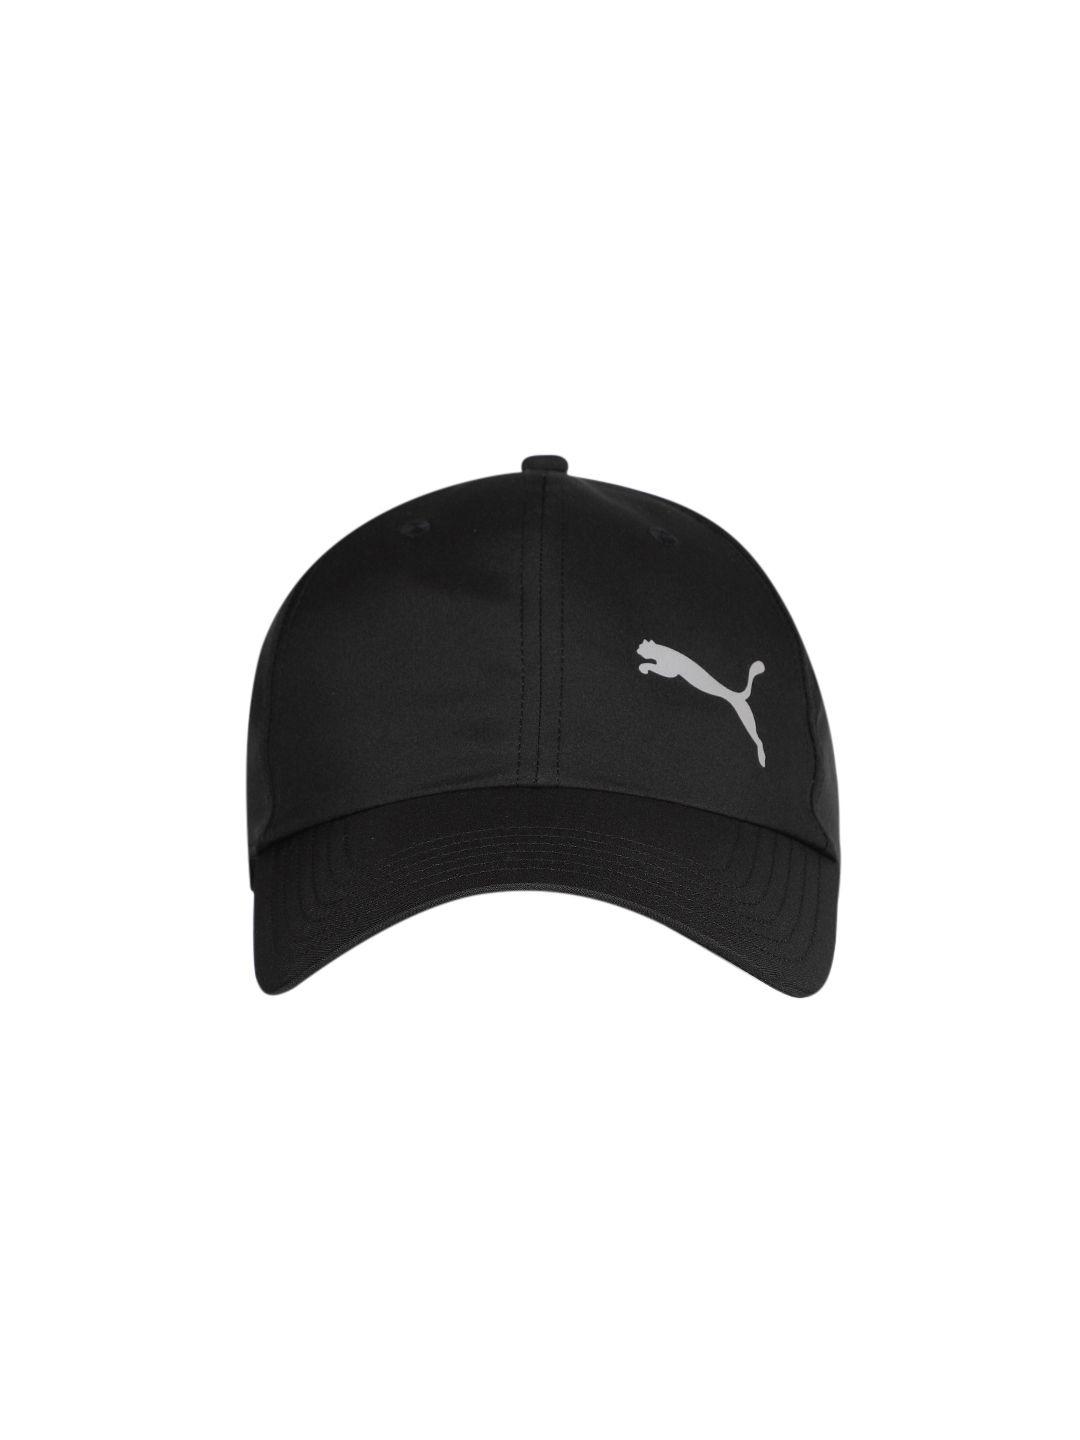 puma unisex black snapback cap